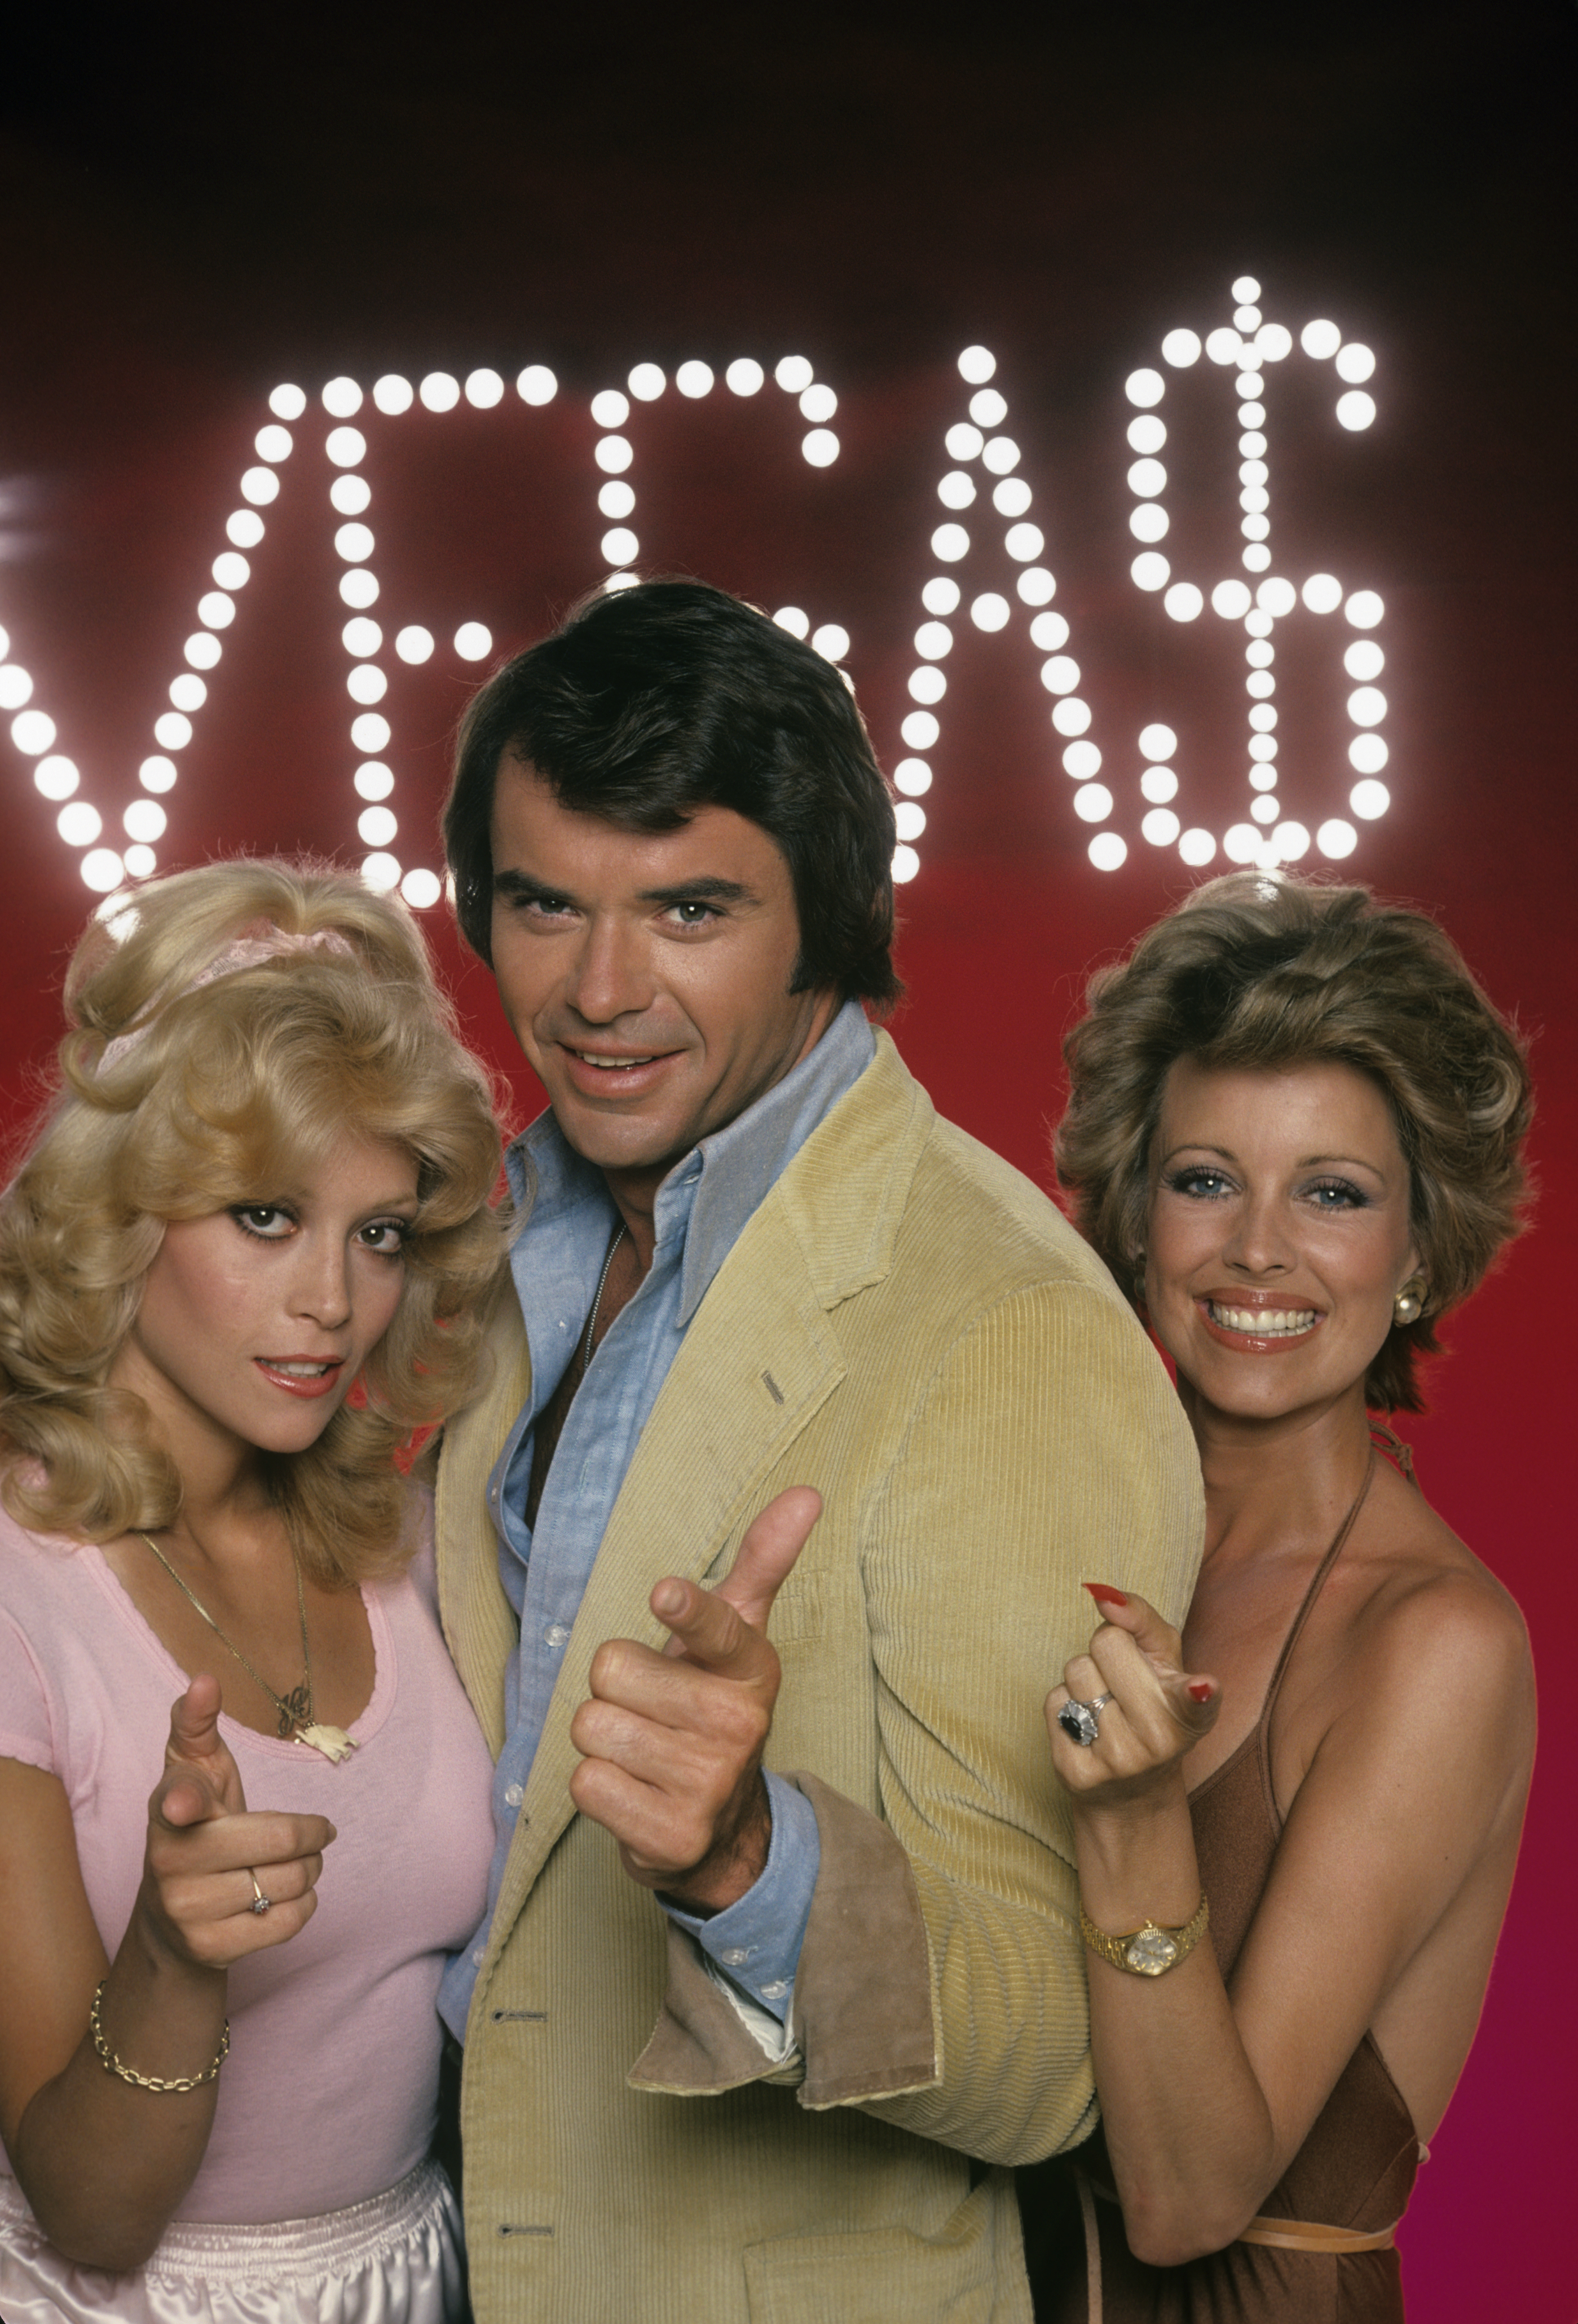 Judy Landers, Robert Urich, and Phyllis Davis in "Vega$" in 1978 | Source: Getty Images